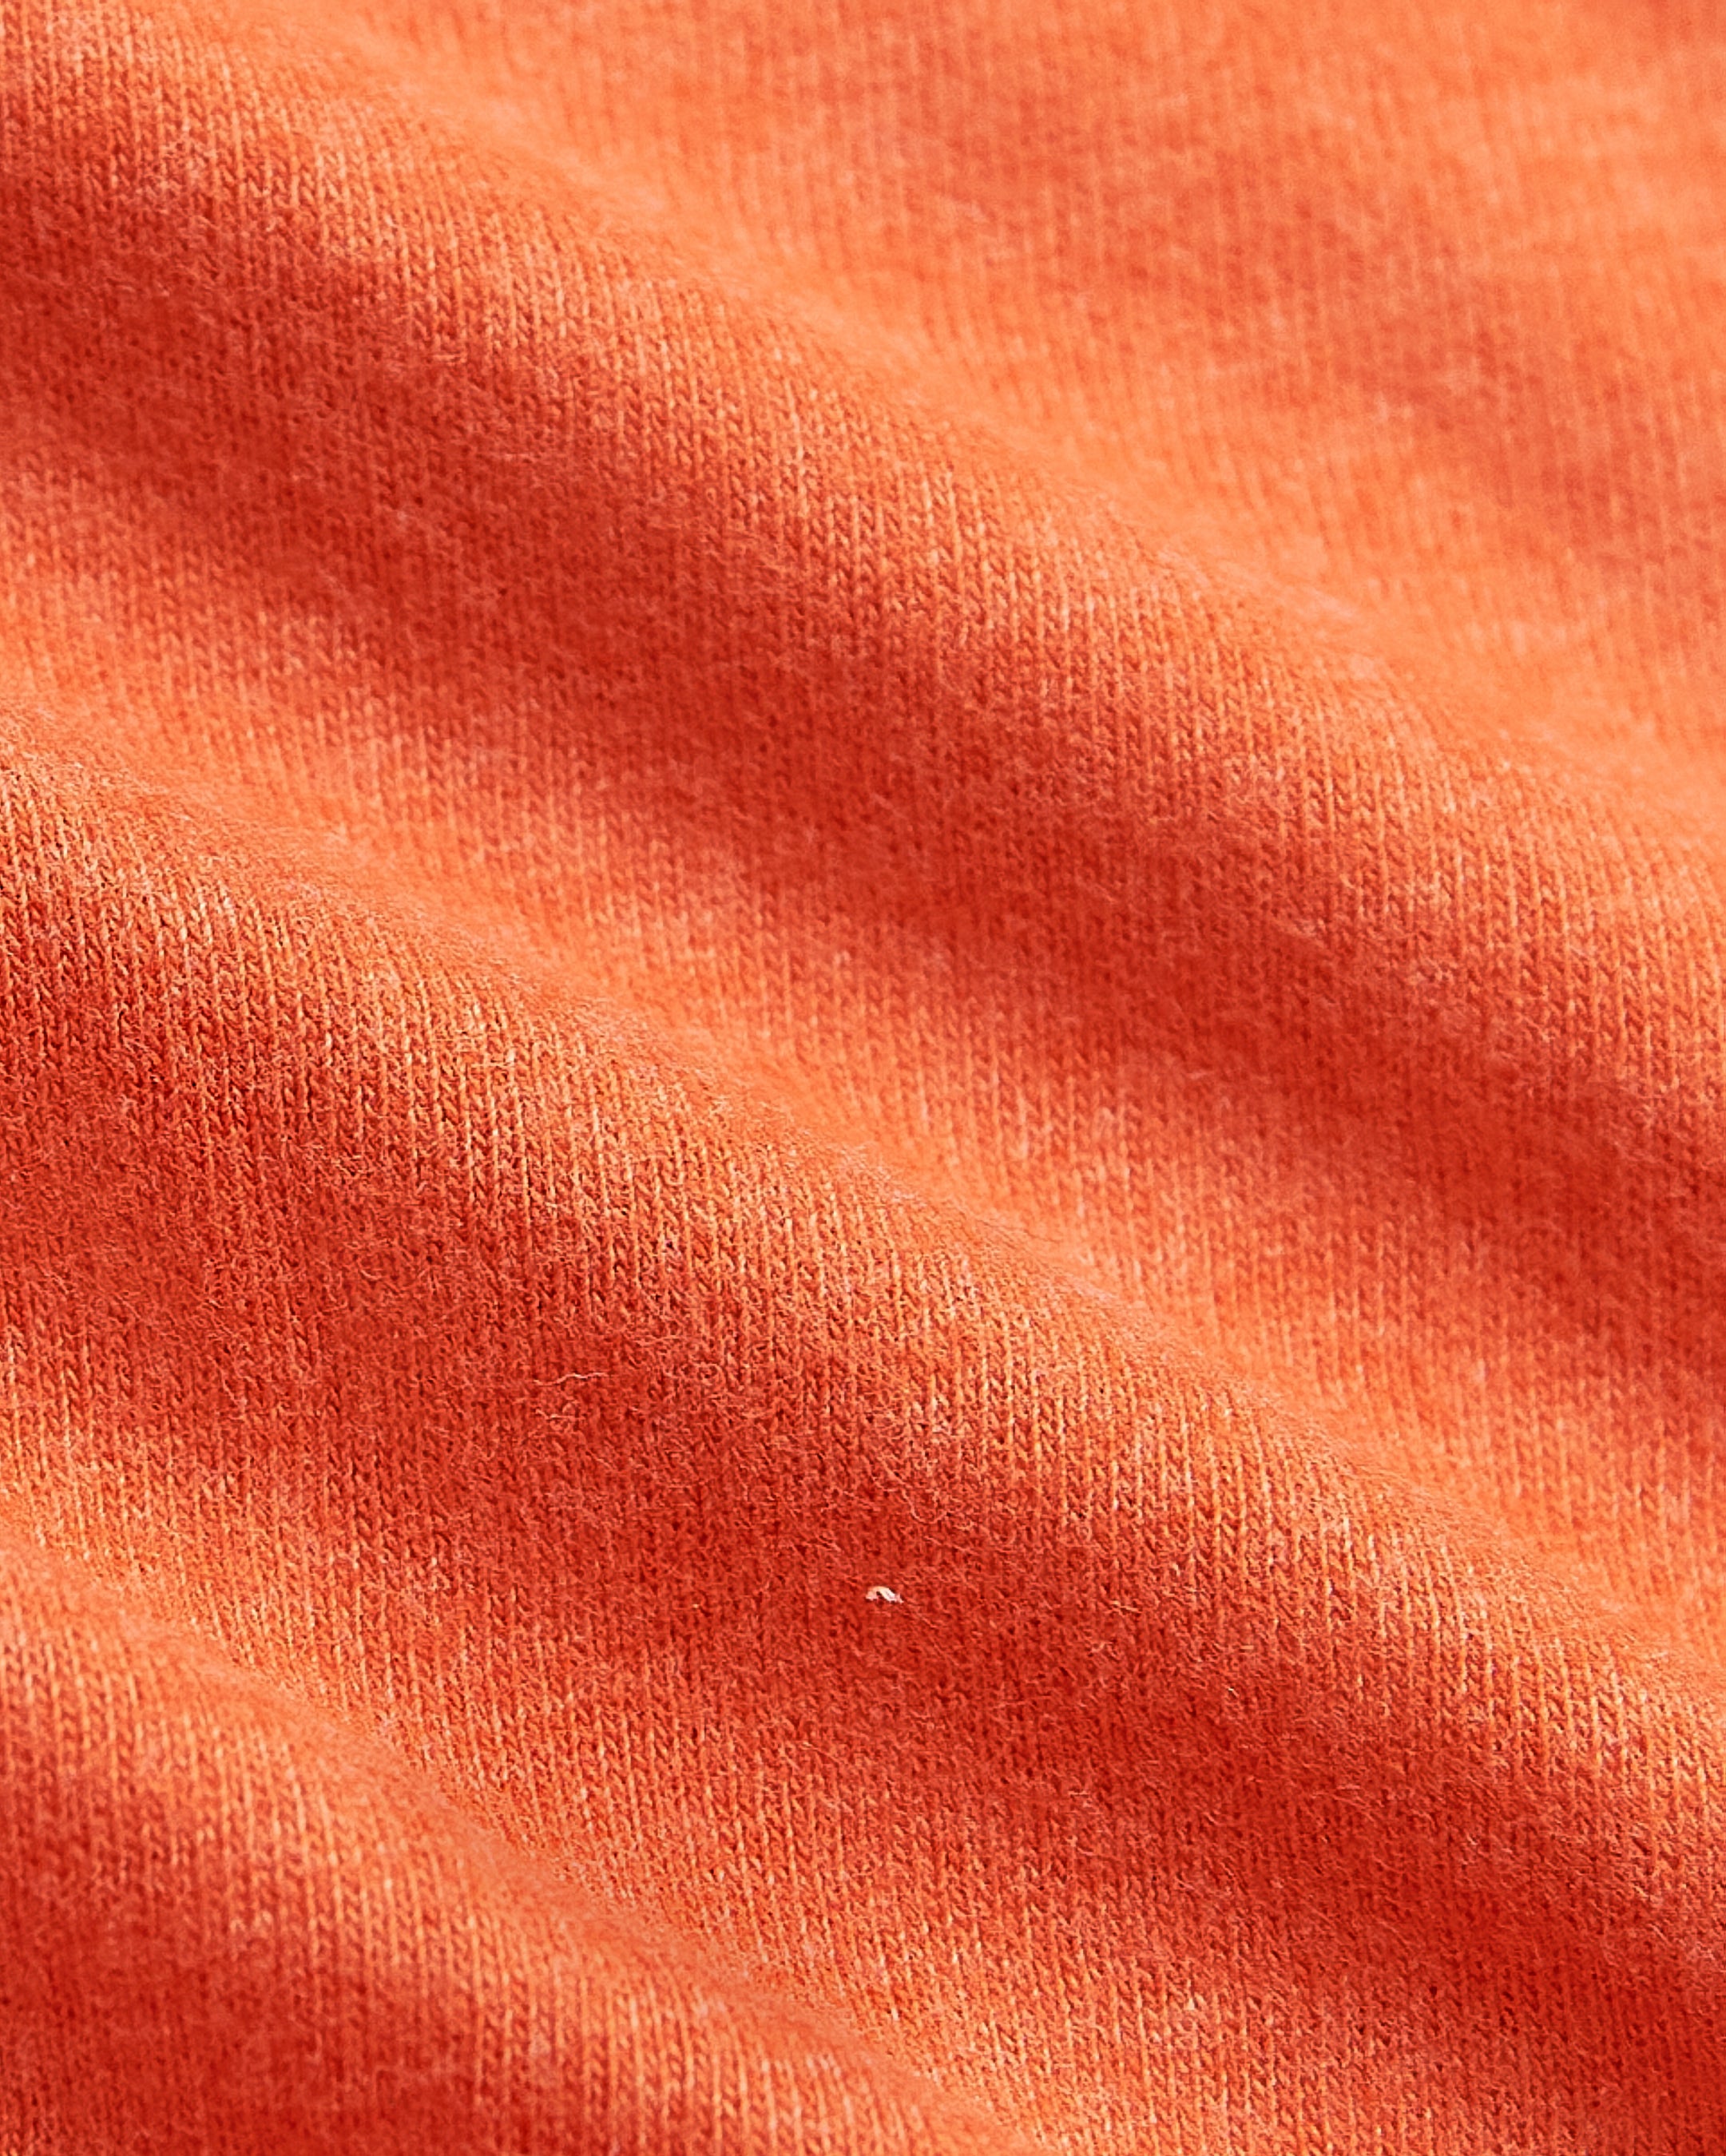 Burnt Orange Heather Crew Neck T-Shirt